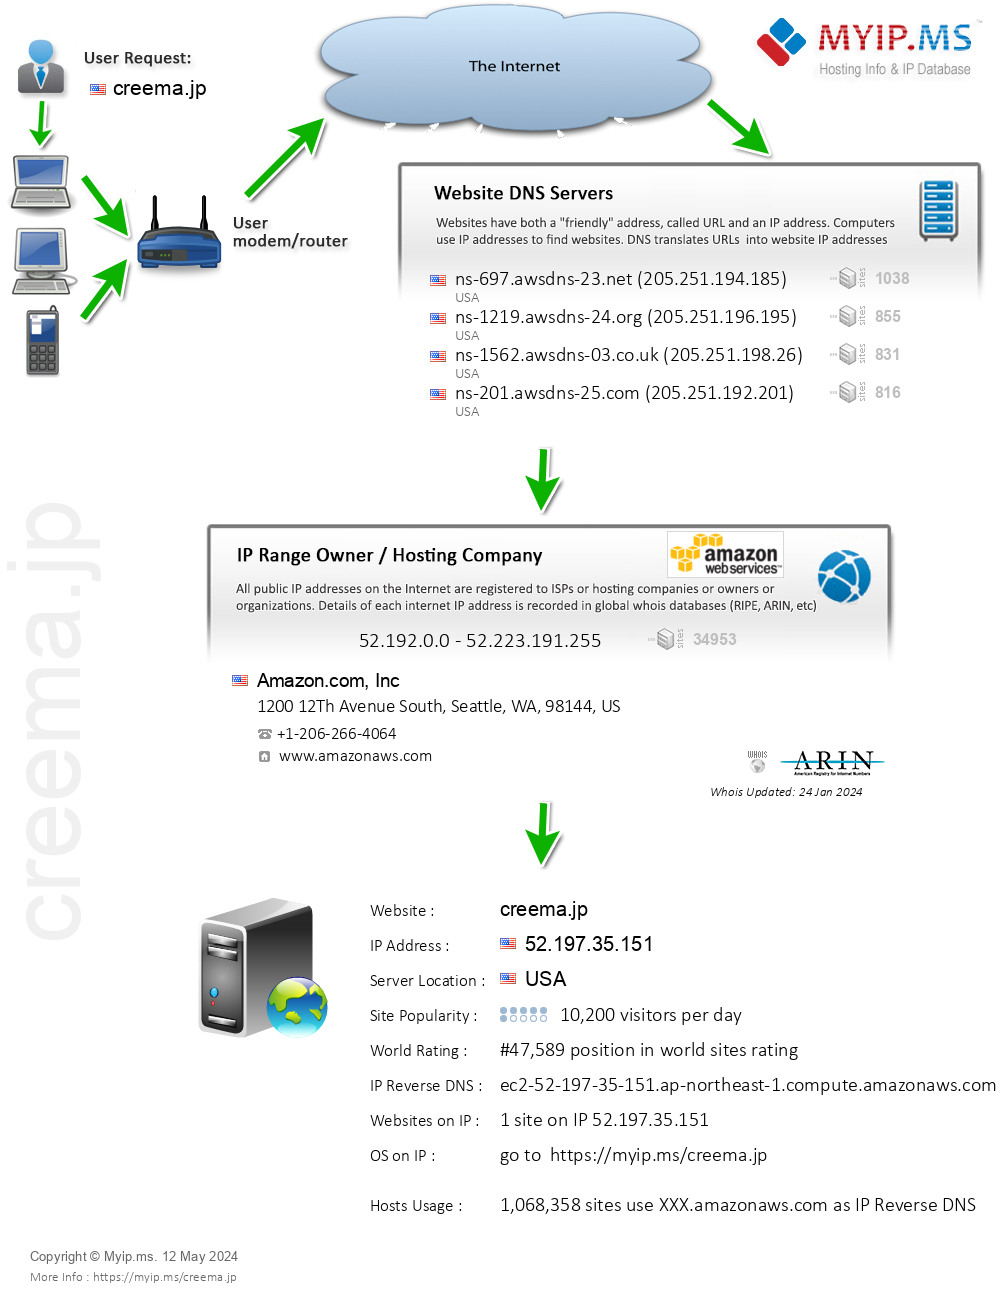 Creema.jp - Website Hosting Visual IP Diagram